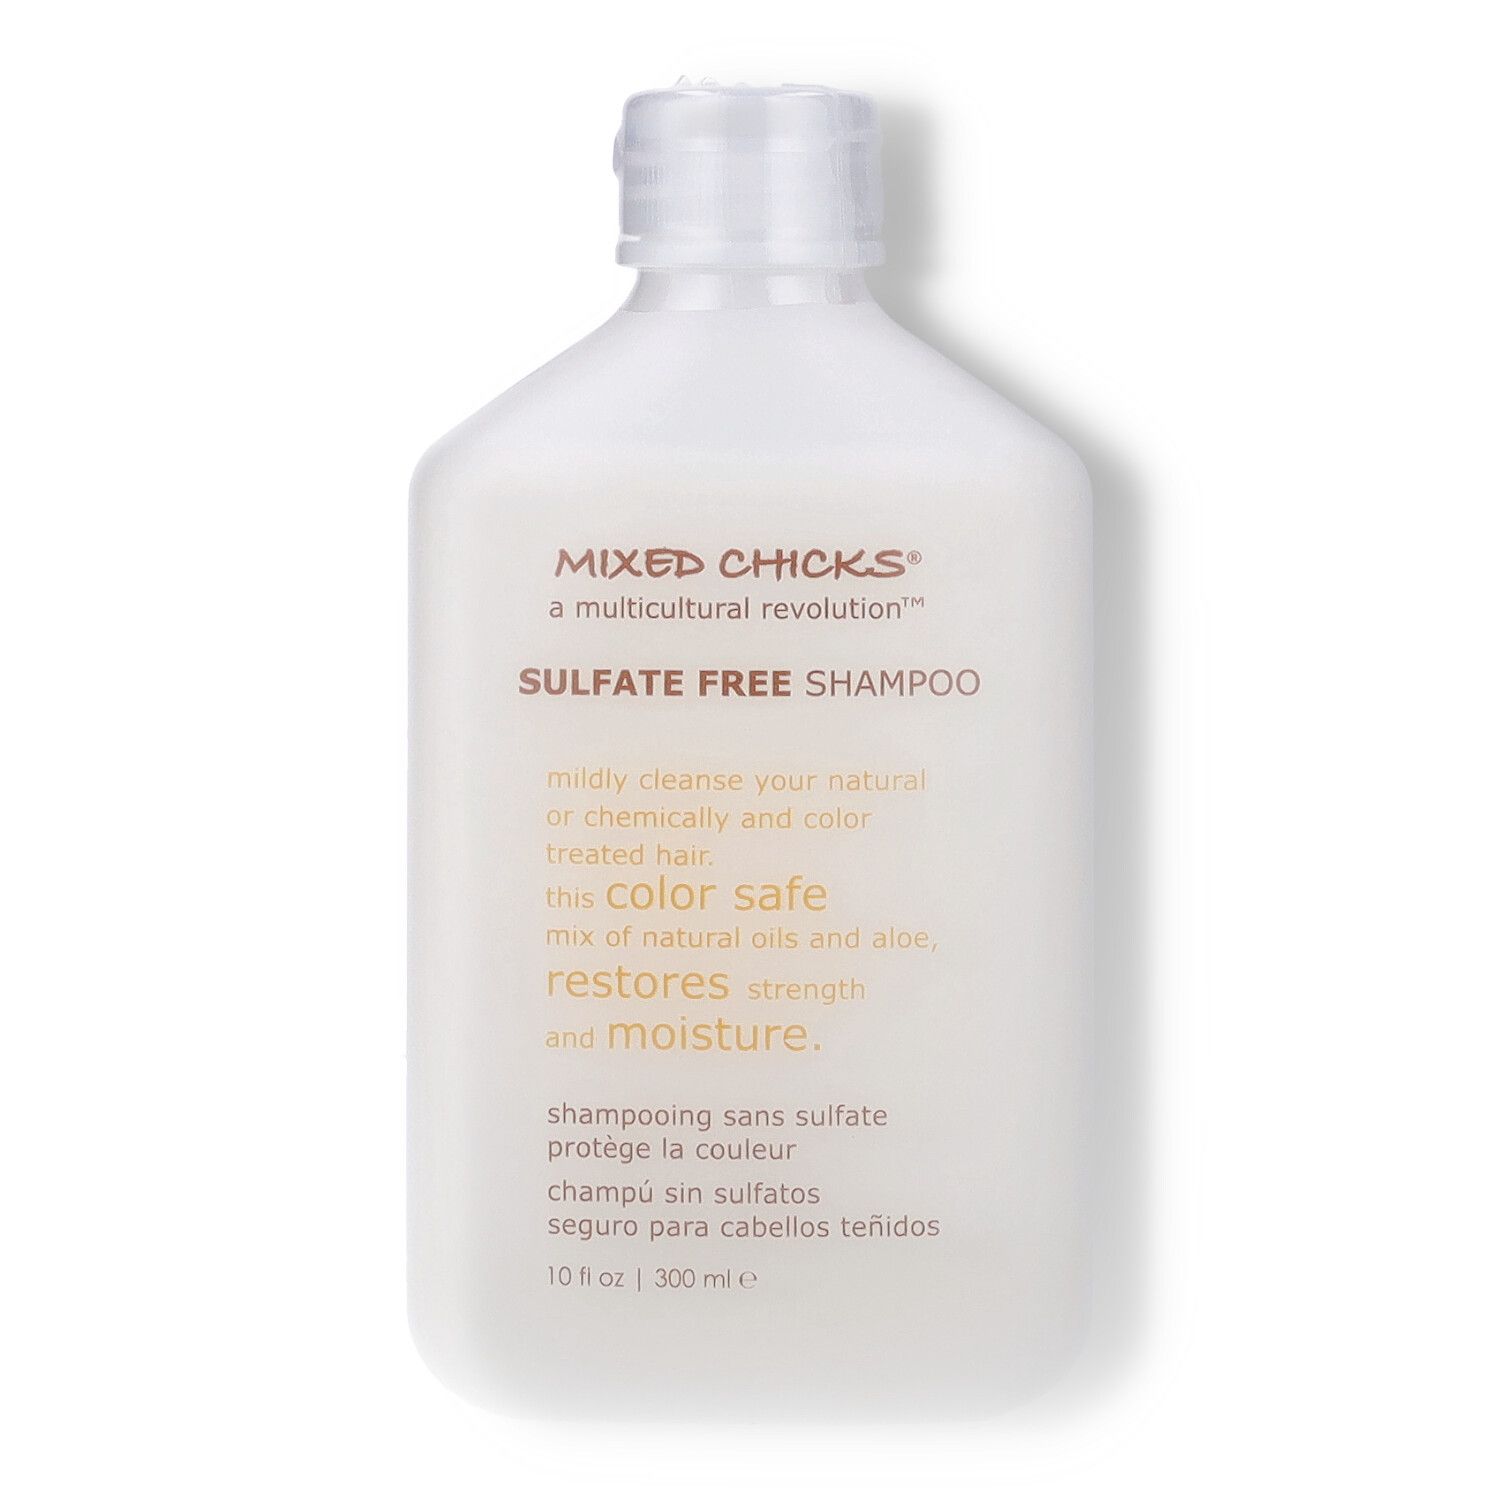 Mixed Chicks Sulfate Free Shampoo - 300ml